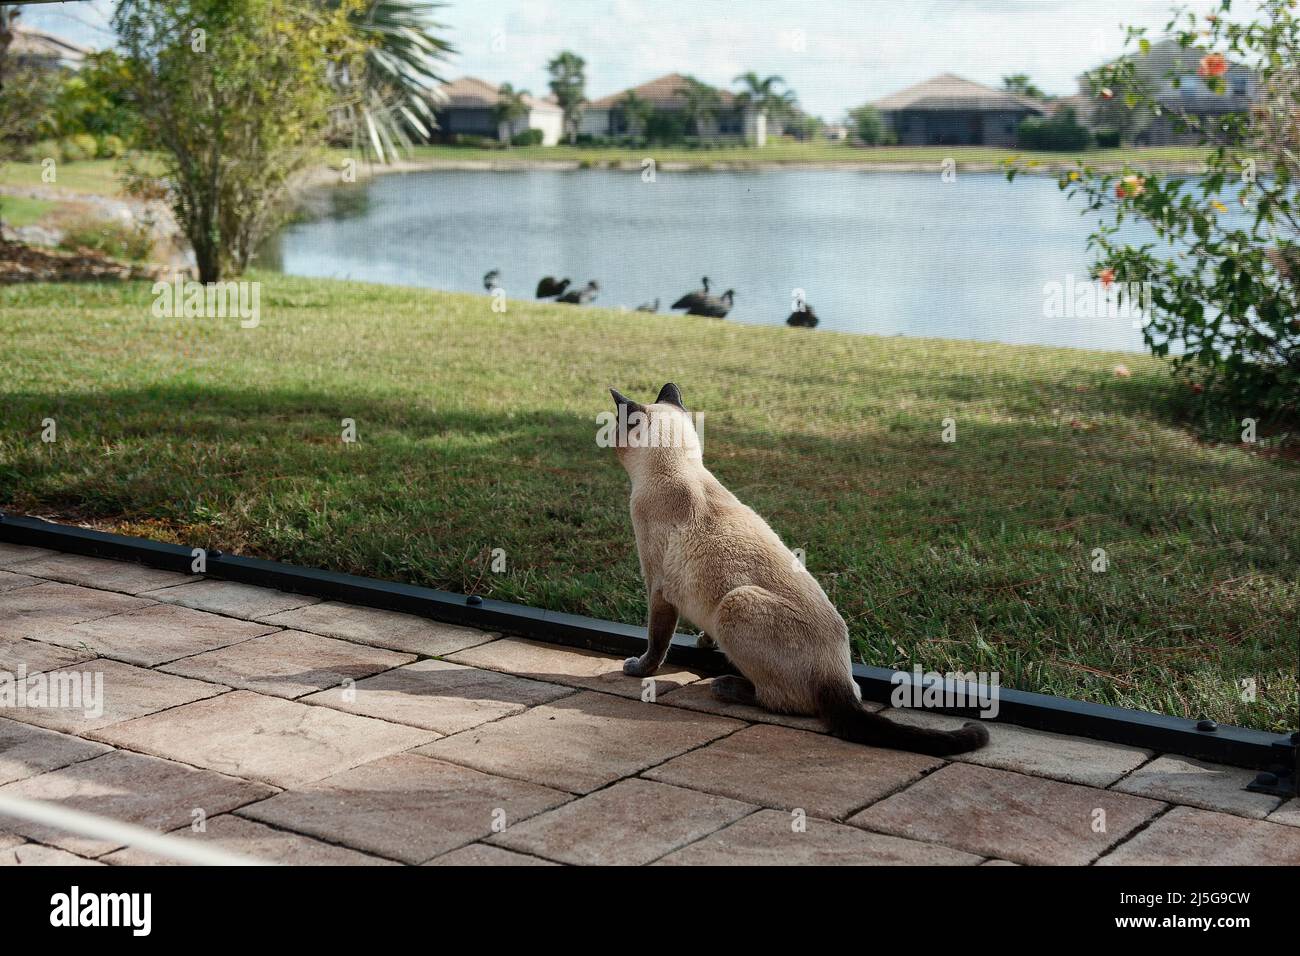 Tonkinese cat looking through screening at birds, pond, grass, animal, pavers, feline, pet, wistful, PR Stock Photo